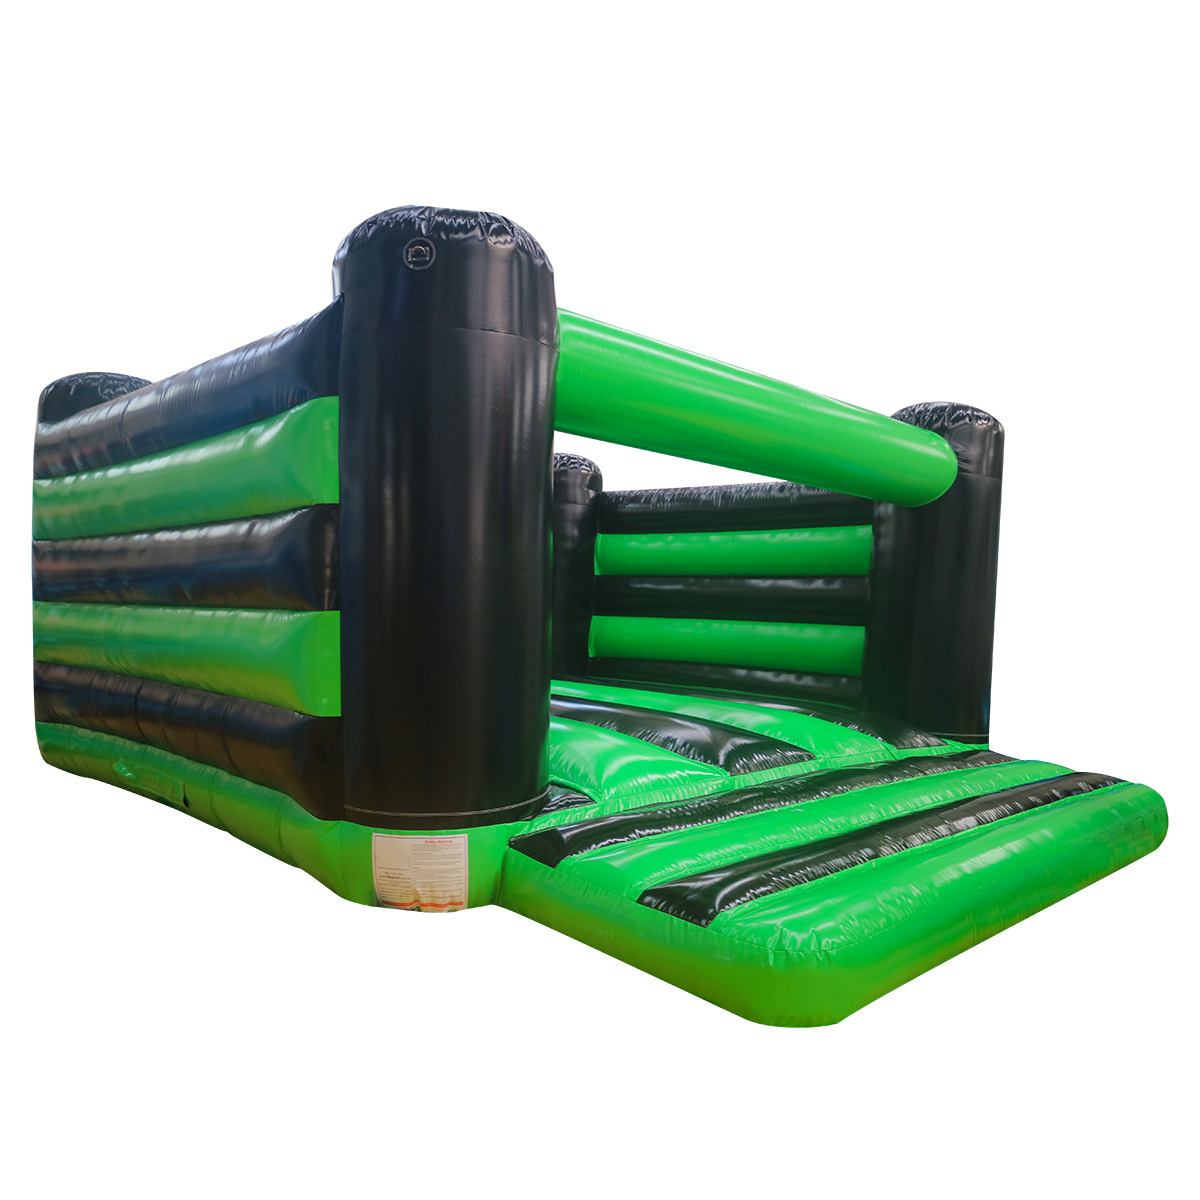 inflatable green bounce houseYG-106